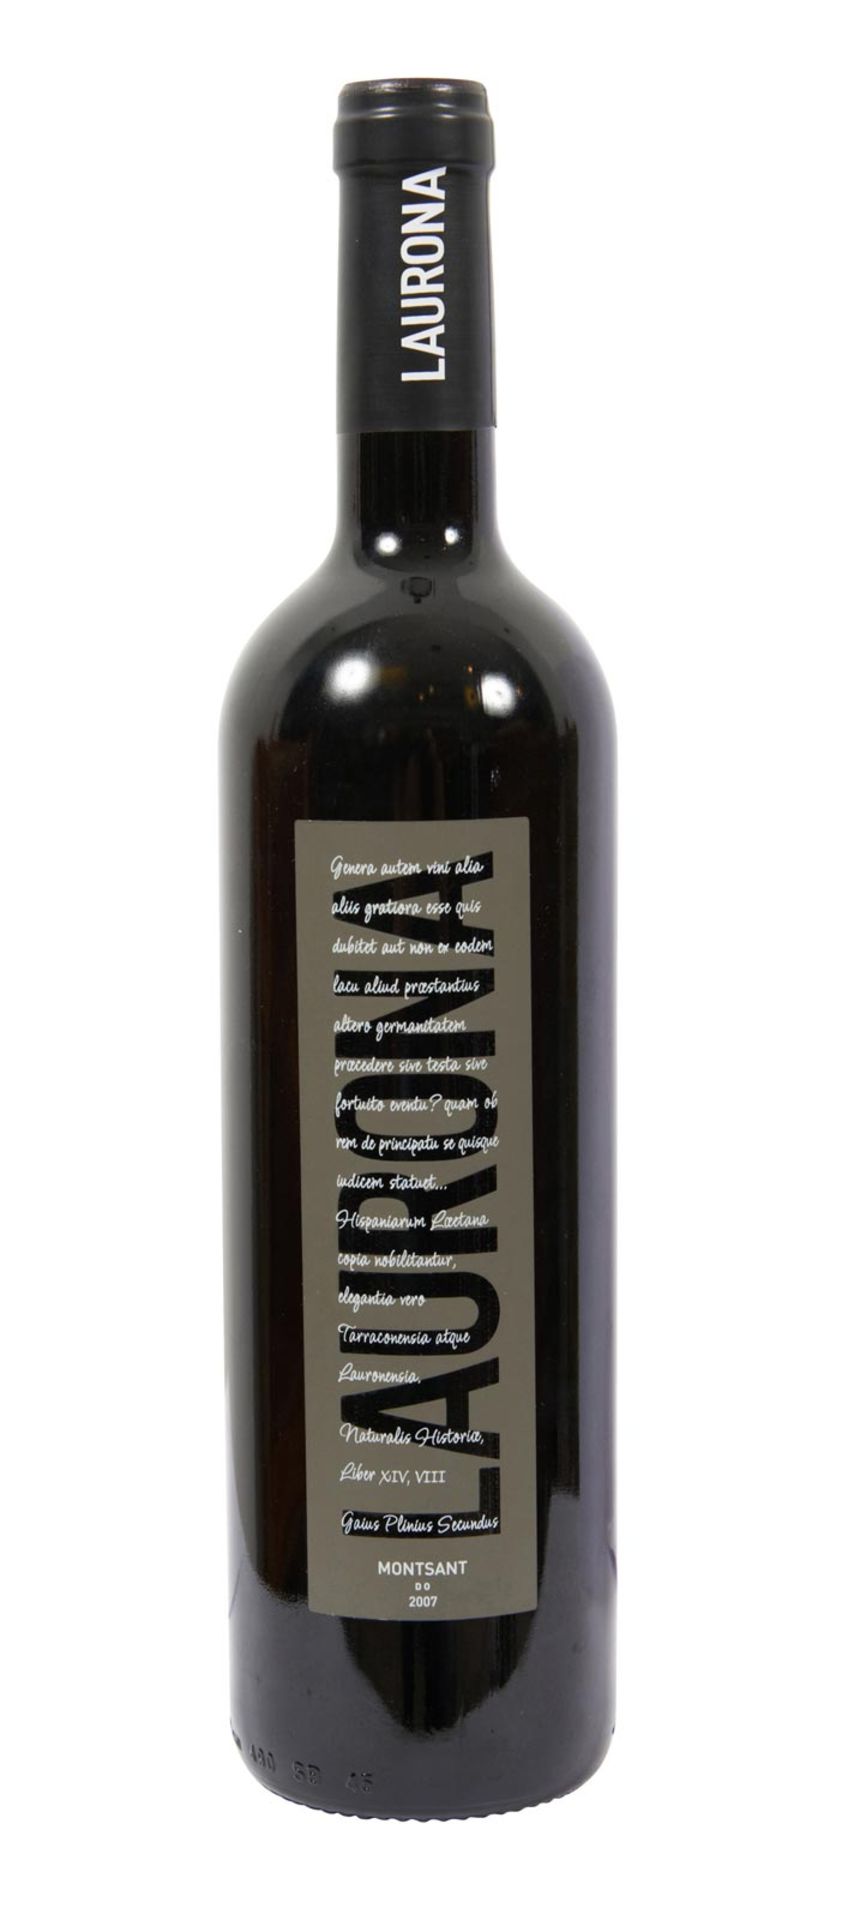 LAURONA. MONTSANT 2007 Seis botellas de vino tinto, cinco variedades.